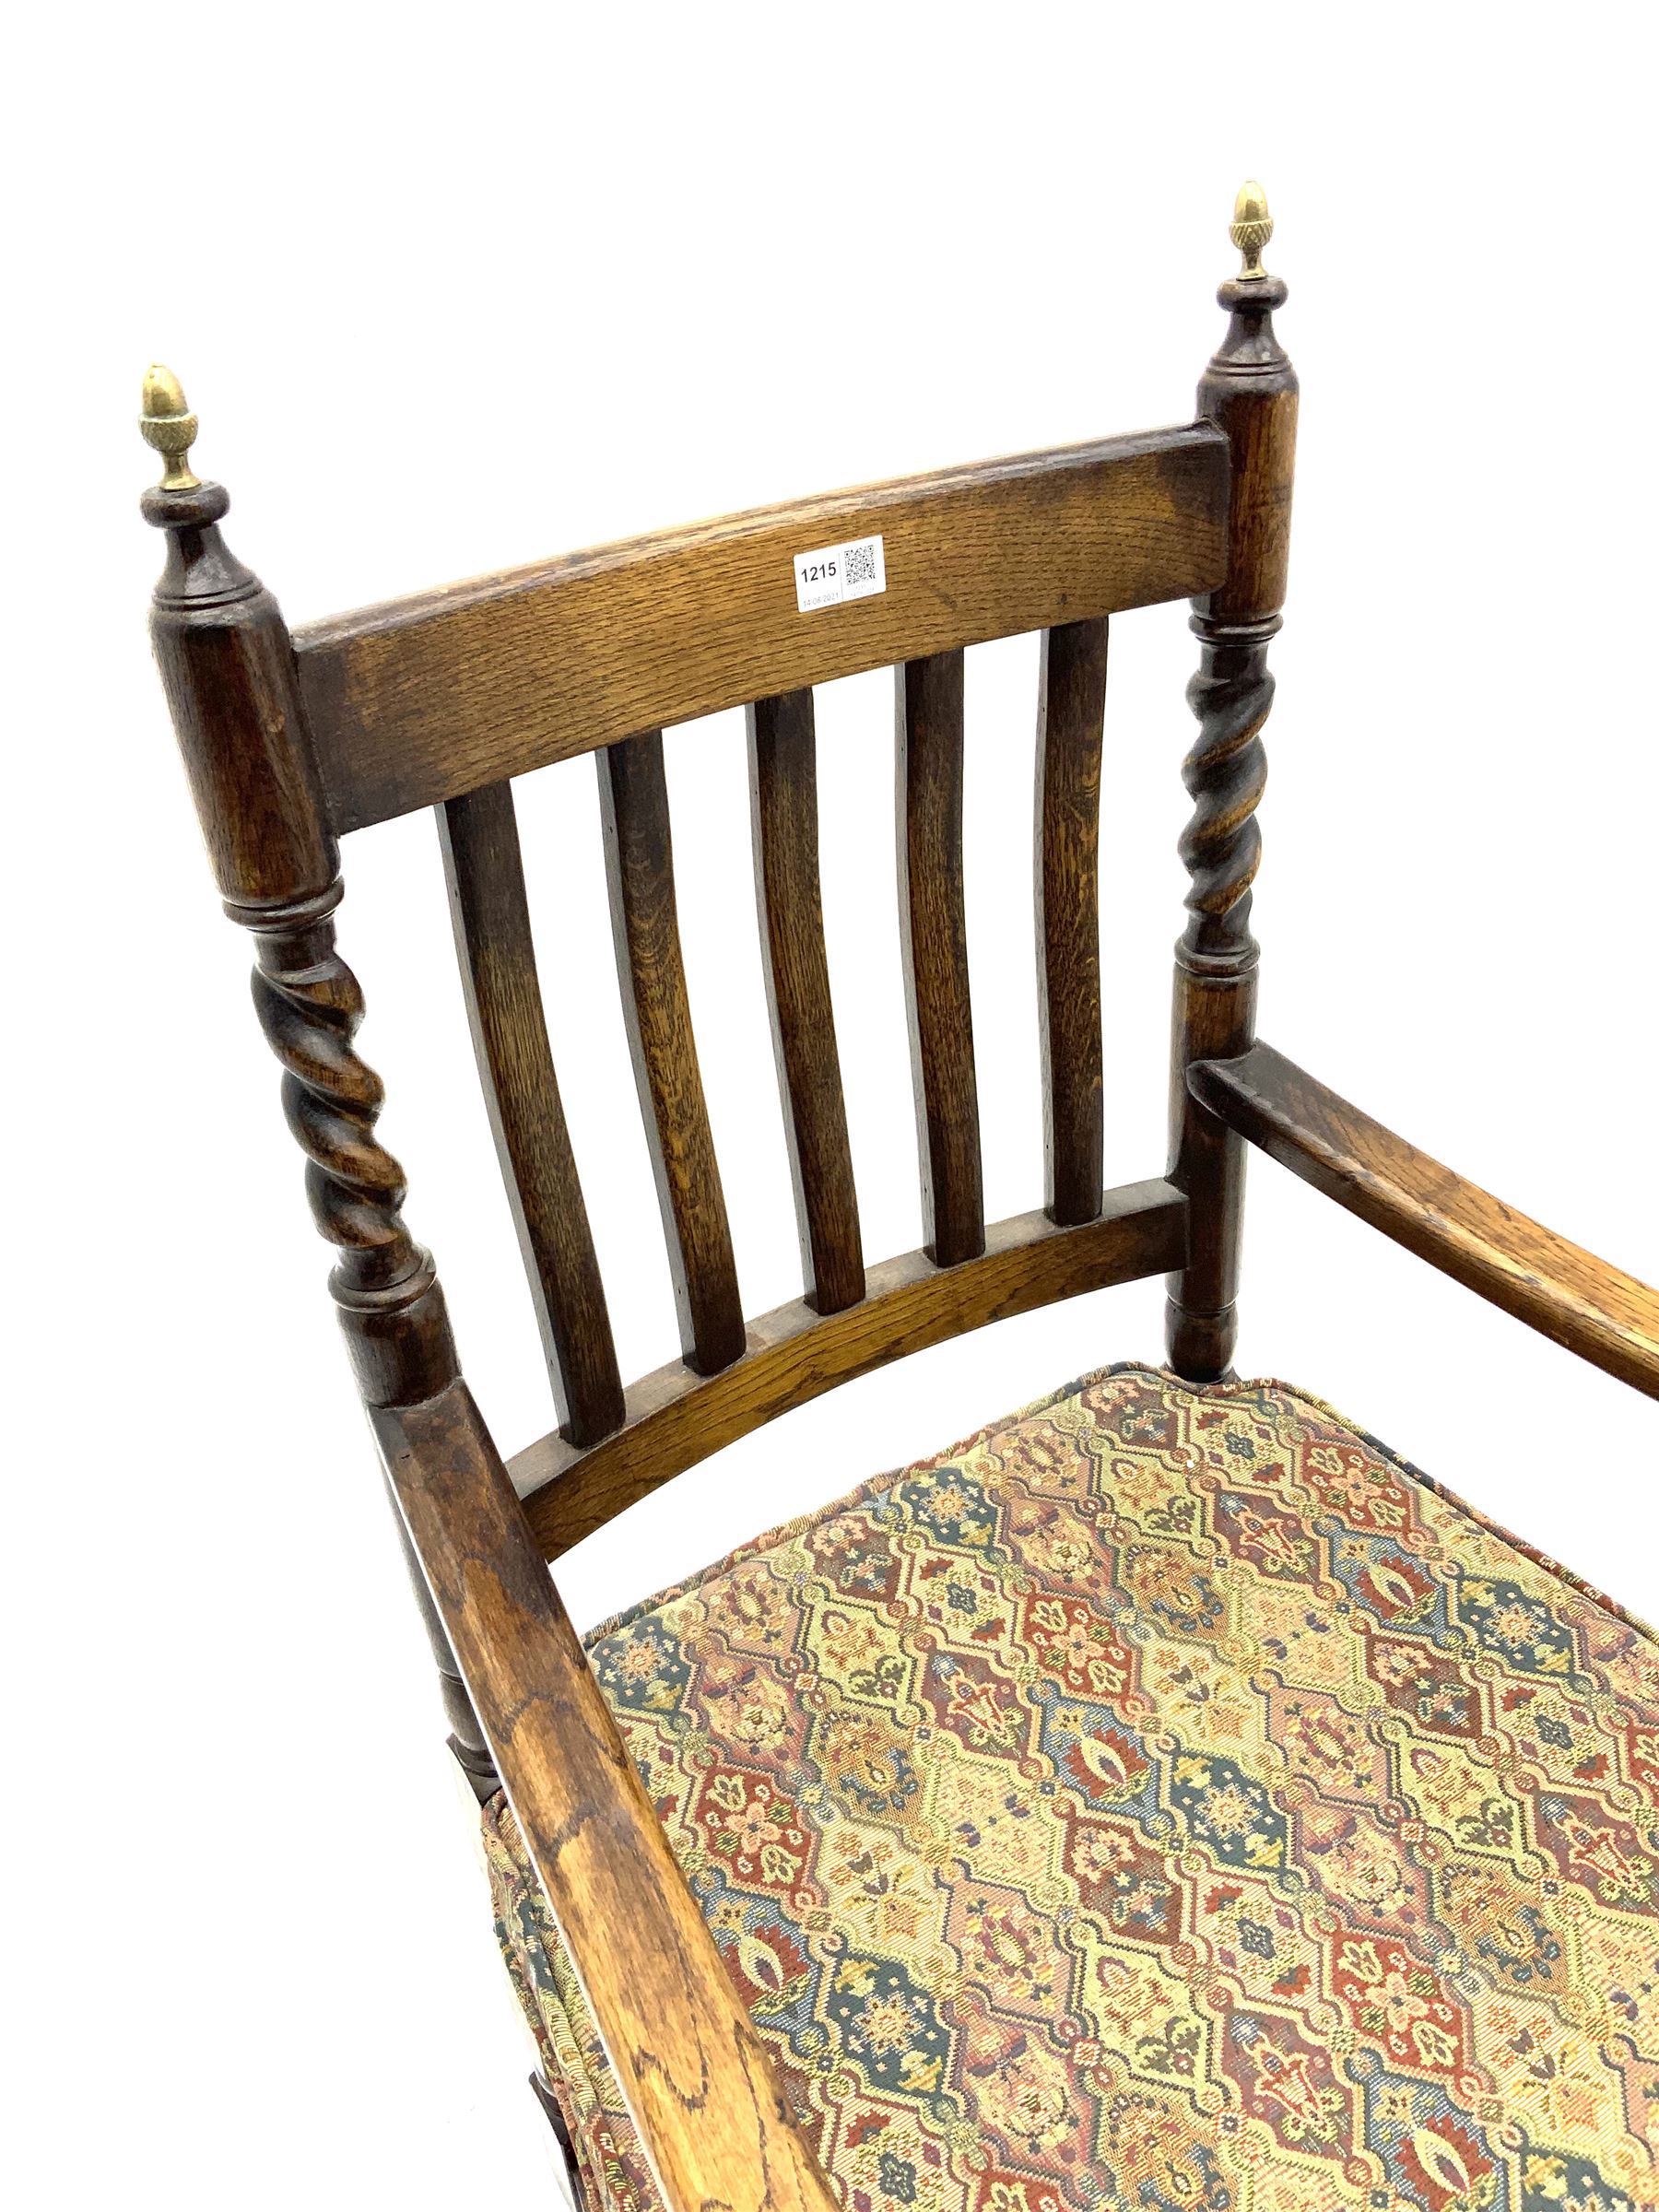 Early 20th century oak barley twist carver armchair - Image 2 of 2